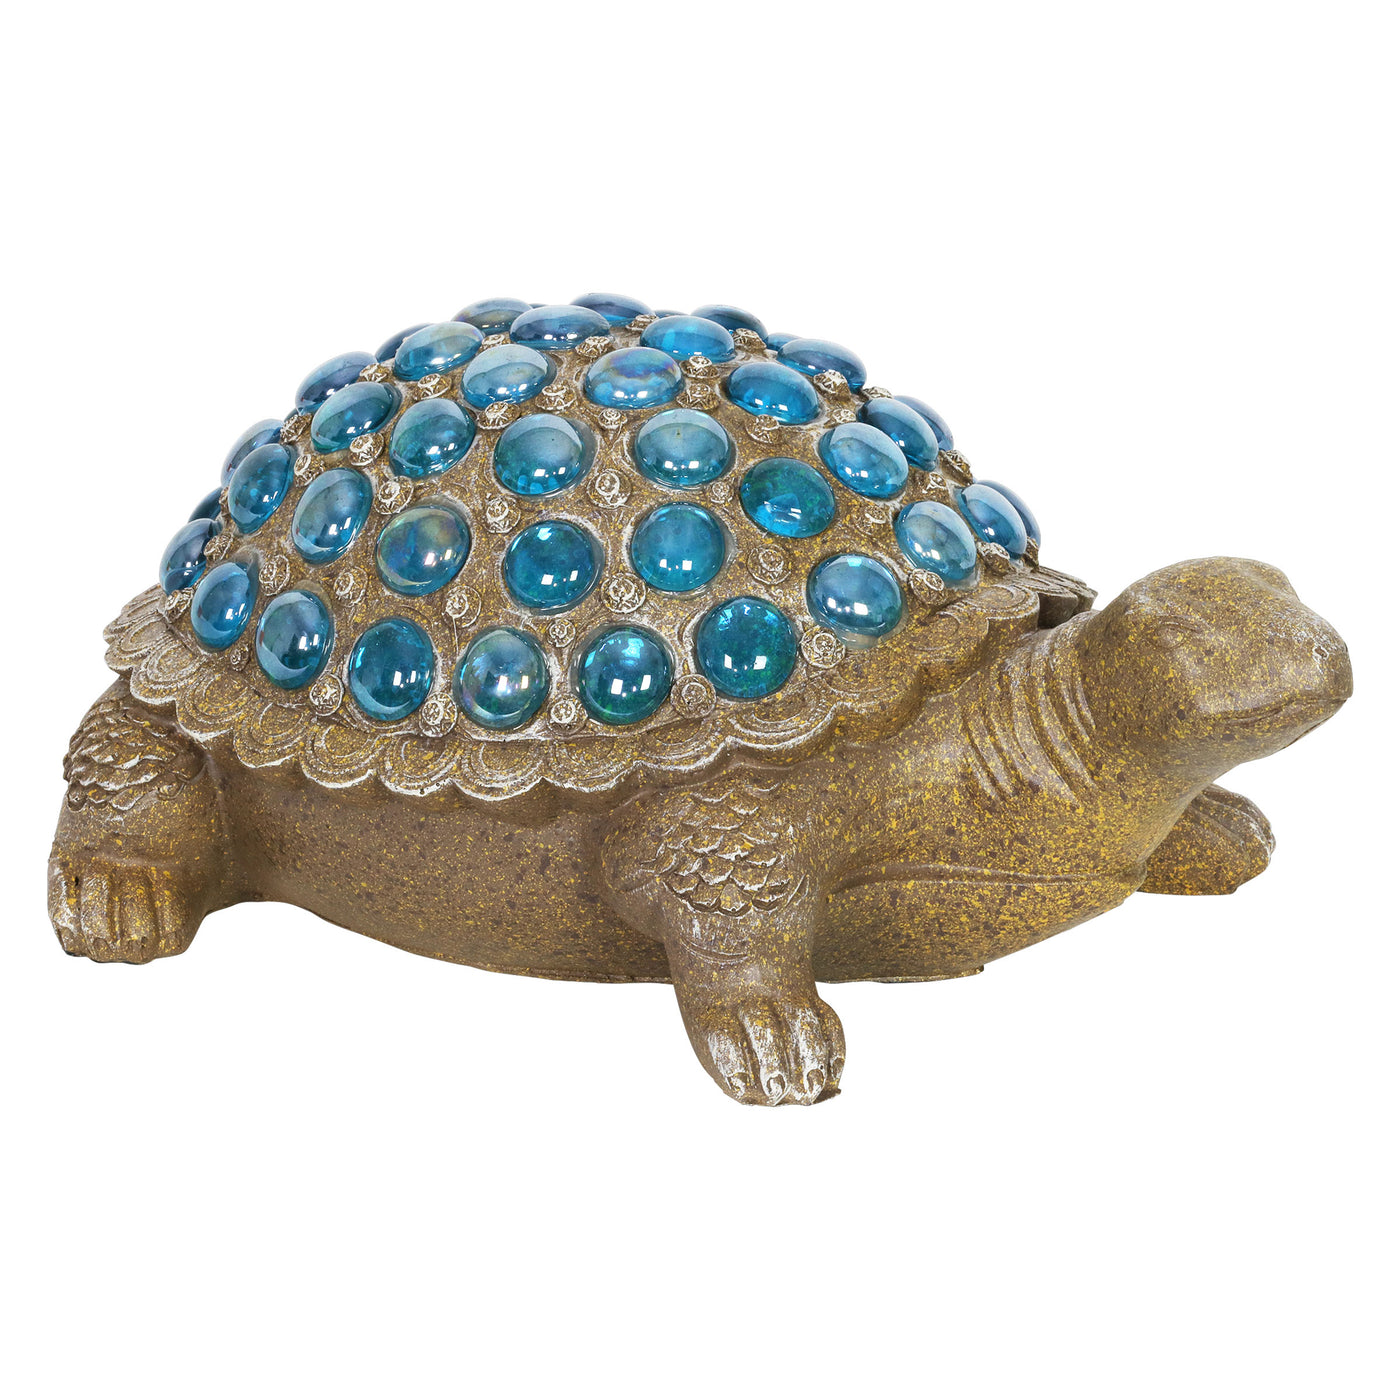 Lot of 4 NEW - 3 Hildie & Jo Beads & Bead Treasures - Shells Turtles  Colorful